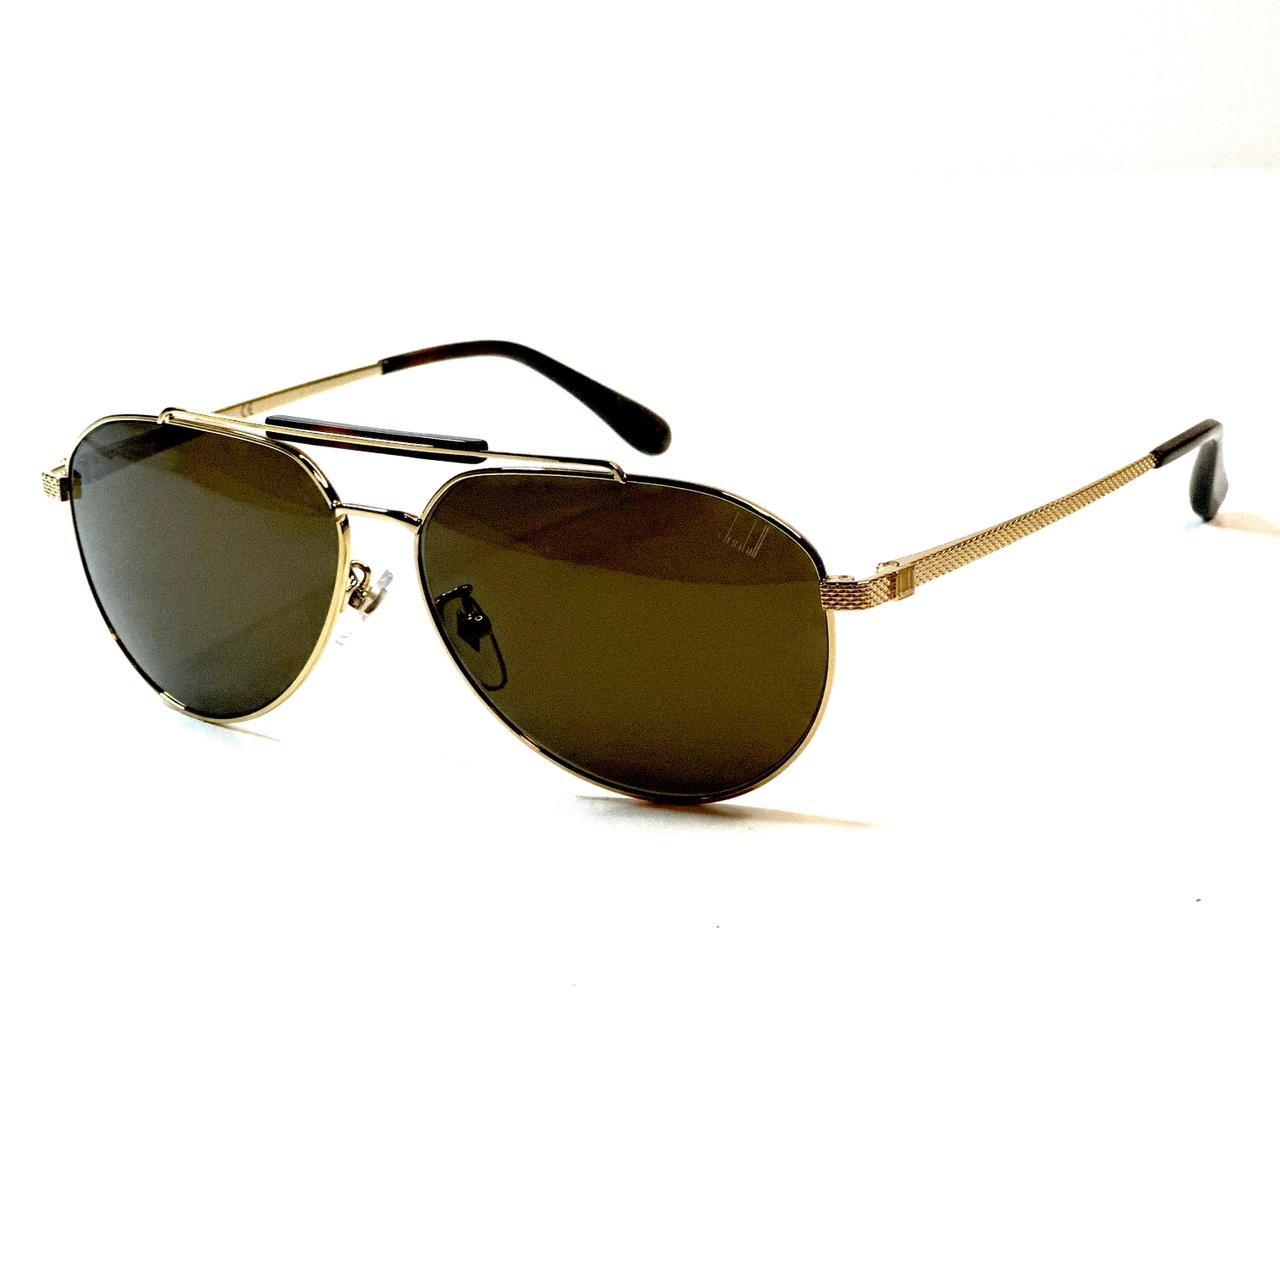 Dunhill Men's Gold Sunglasses